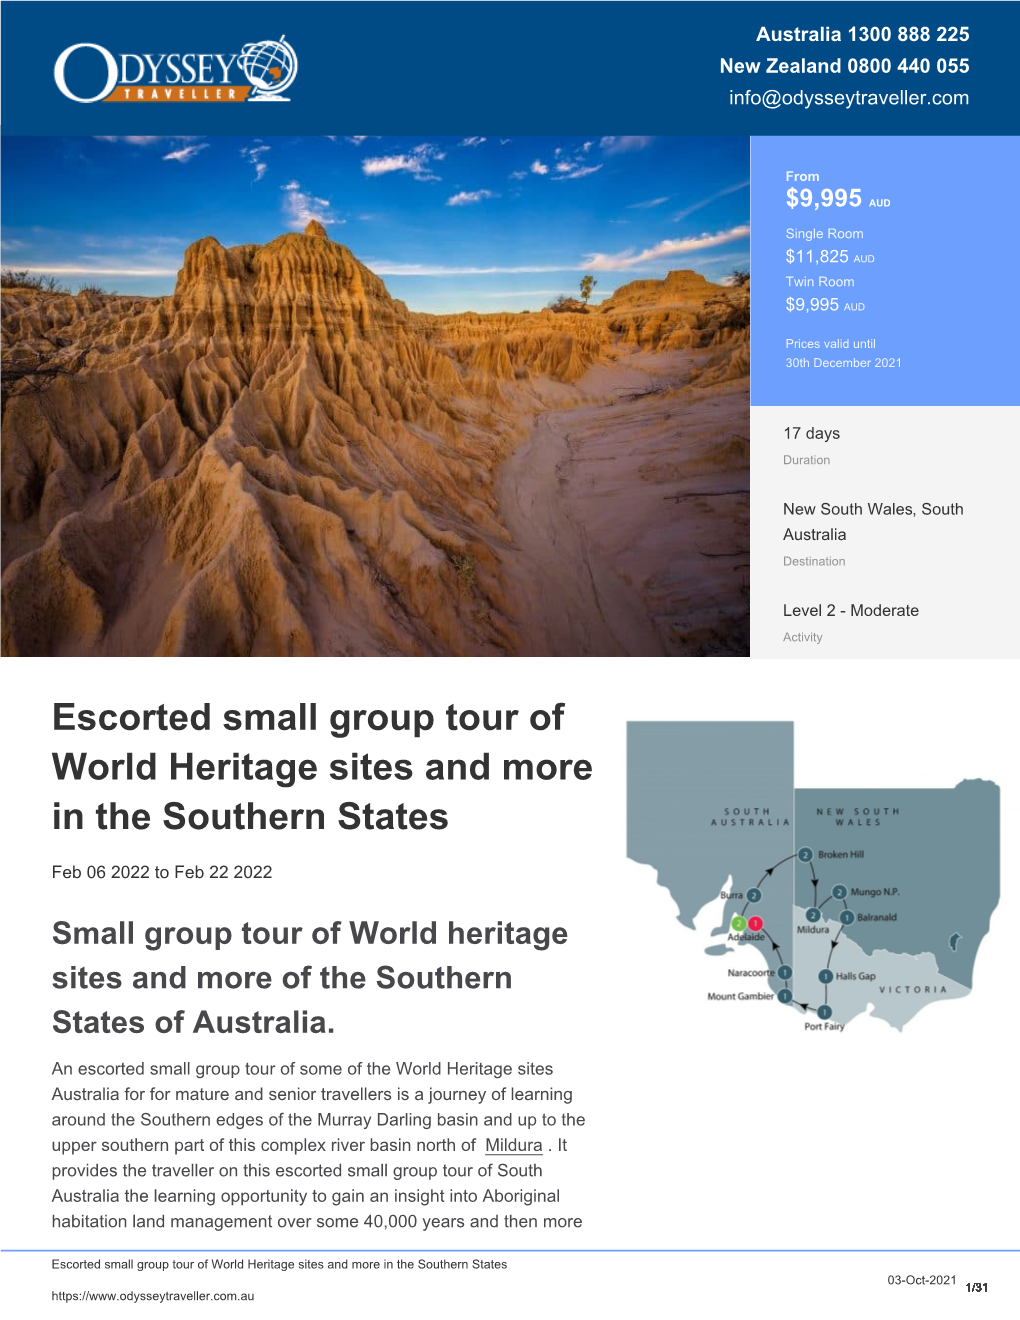 Australian Southern States World Heritage Sites